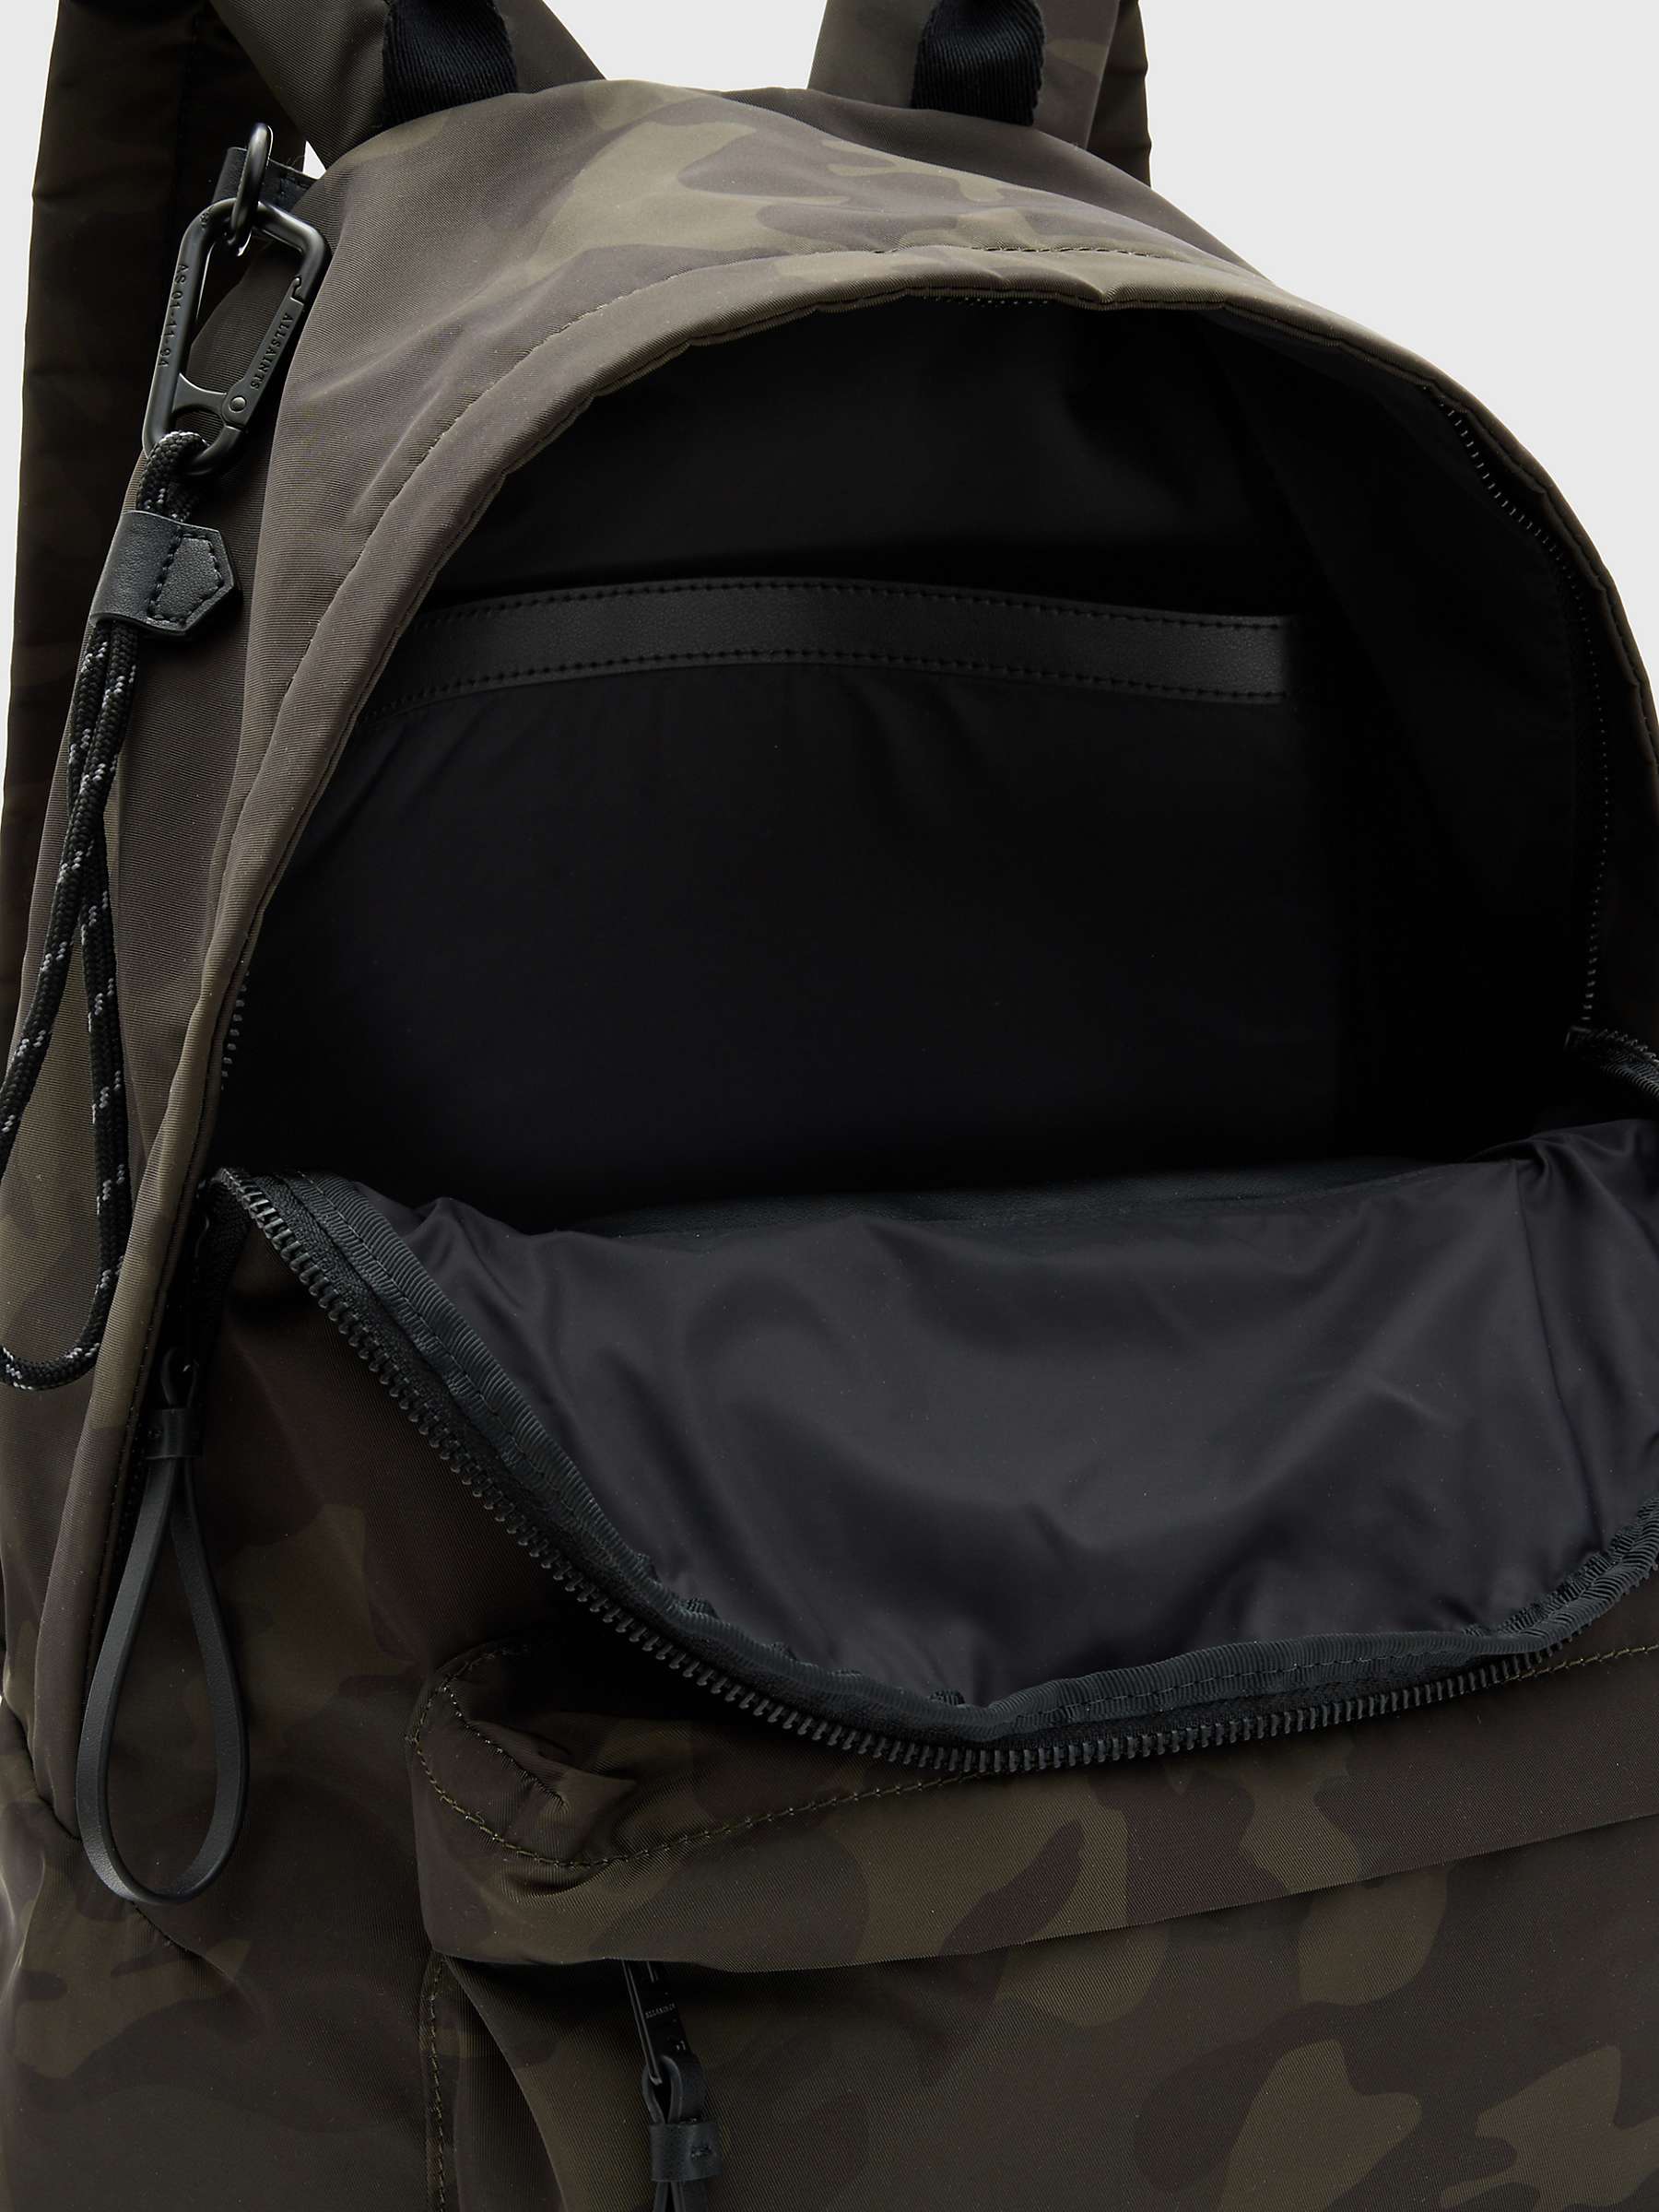 Buy AllSaints Carabiner Backpack, Camo Online at johnlewis.com